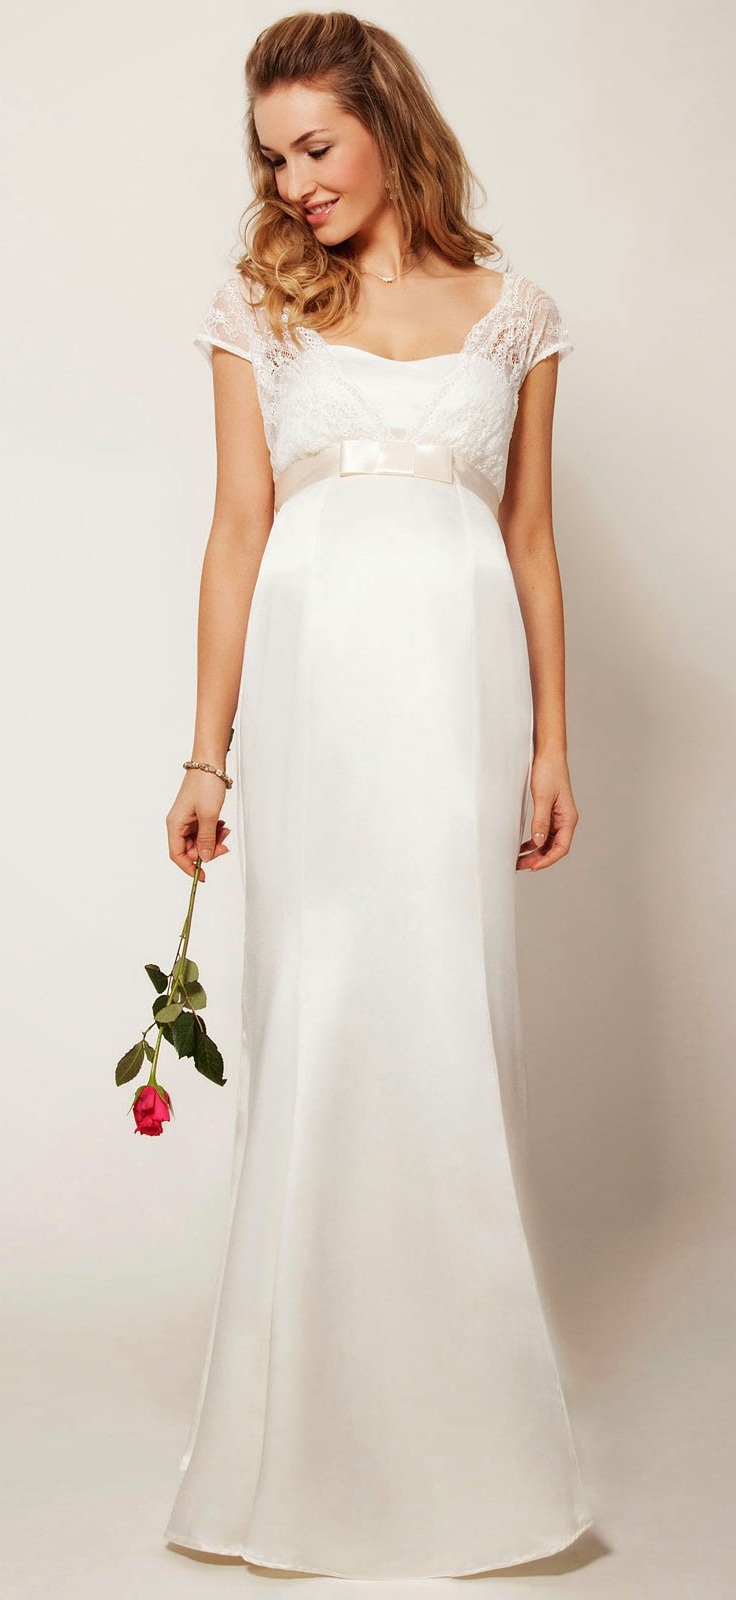 20 Simple Elegant Wedding Dresses Ideas - Wohh Wedding